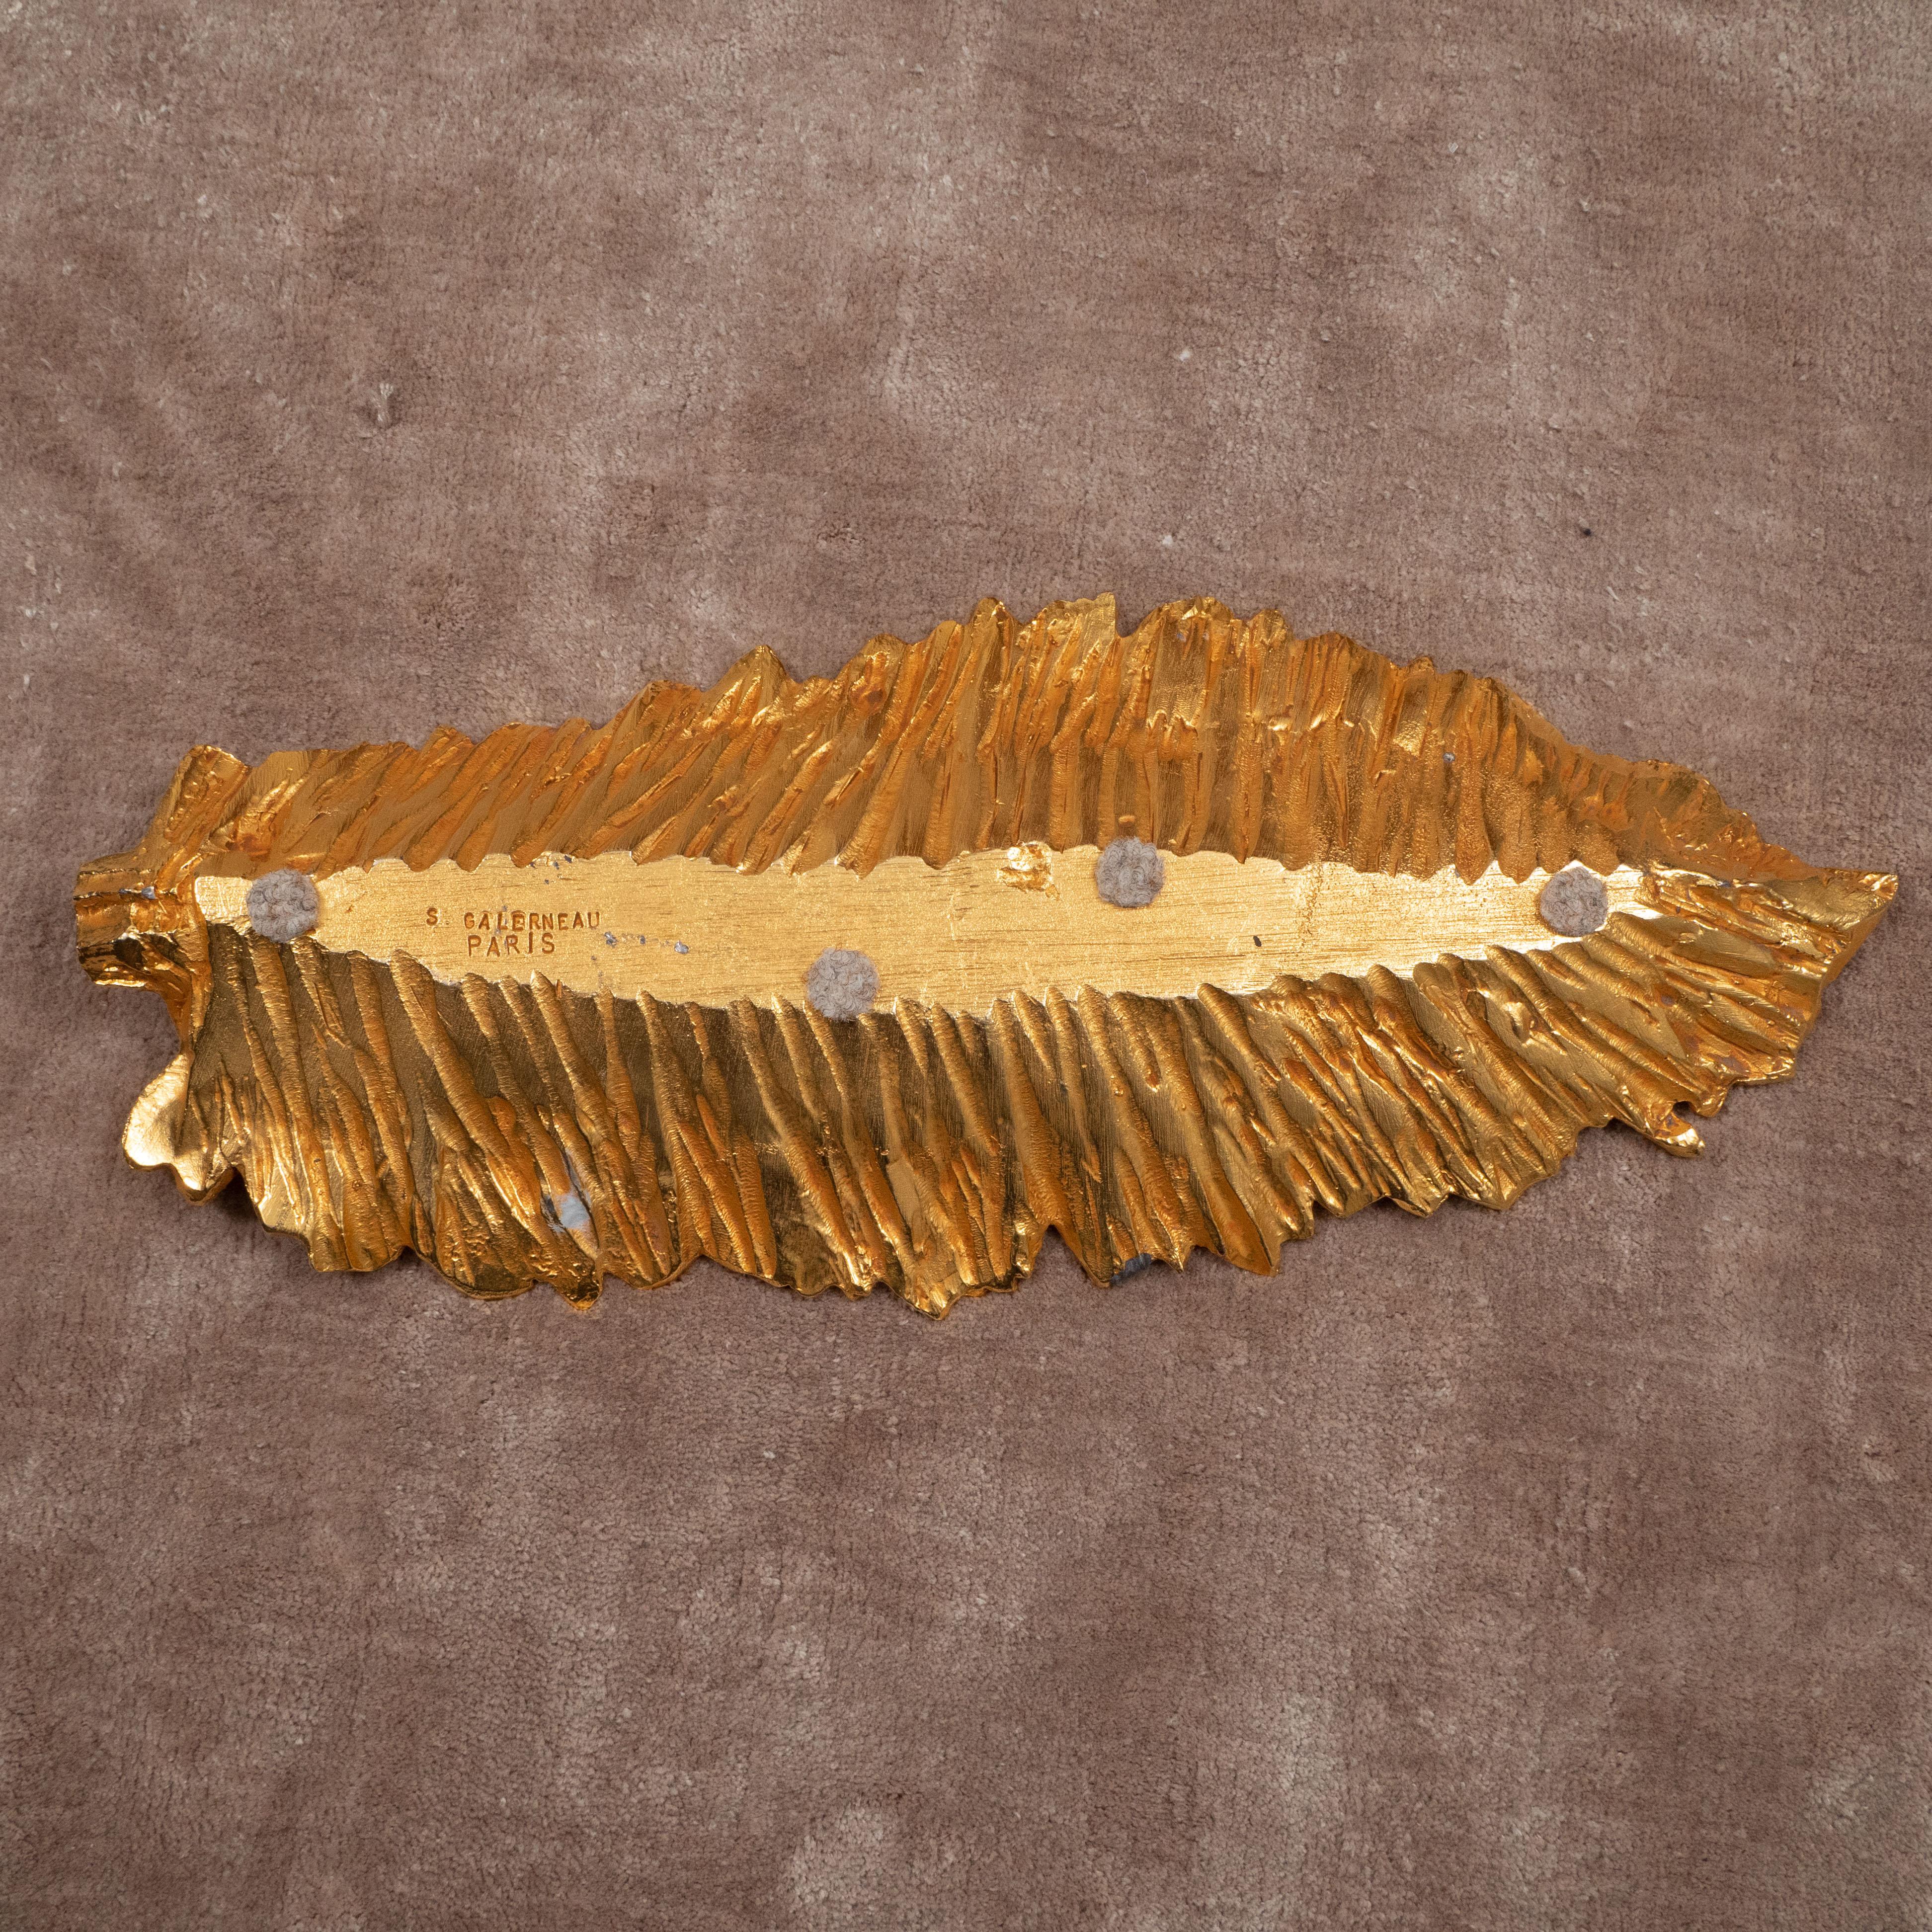 Stephane Galerneau Gilt Leaf-shaped Decorative Dish 13